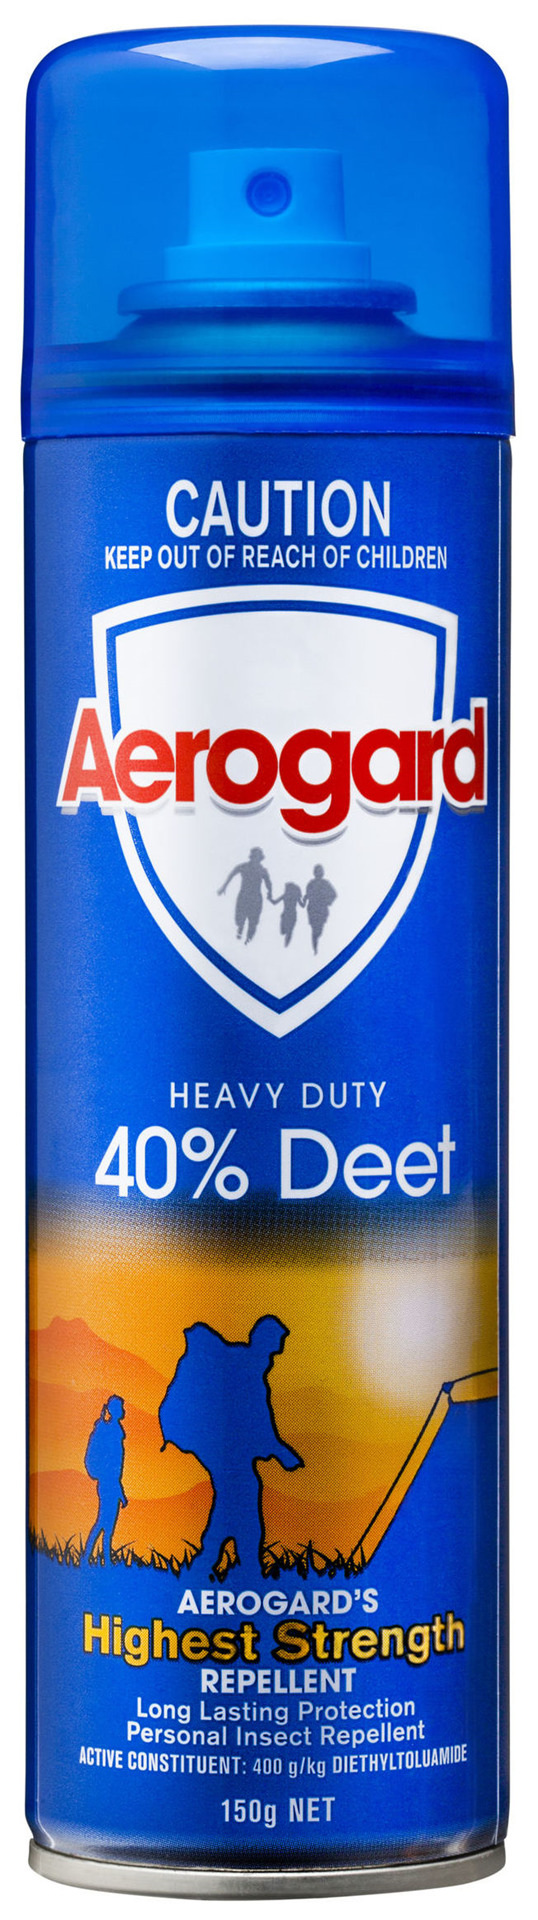 Aerogard Heavy Duty 40% Deet Insect Repellent Aerosol Spray 150G